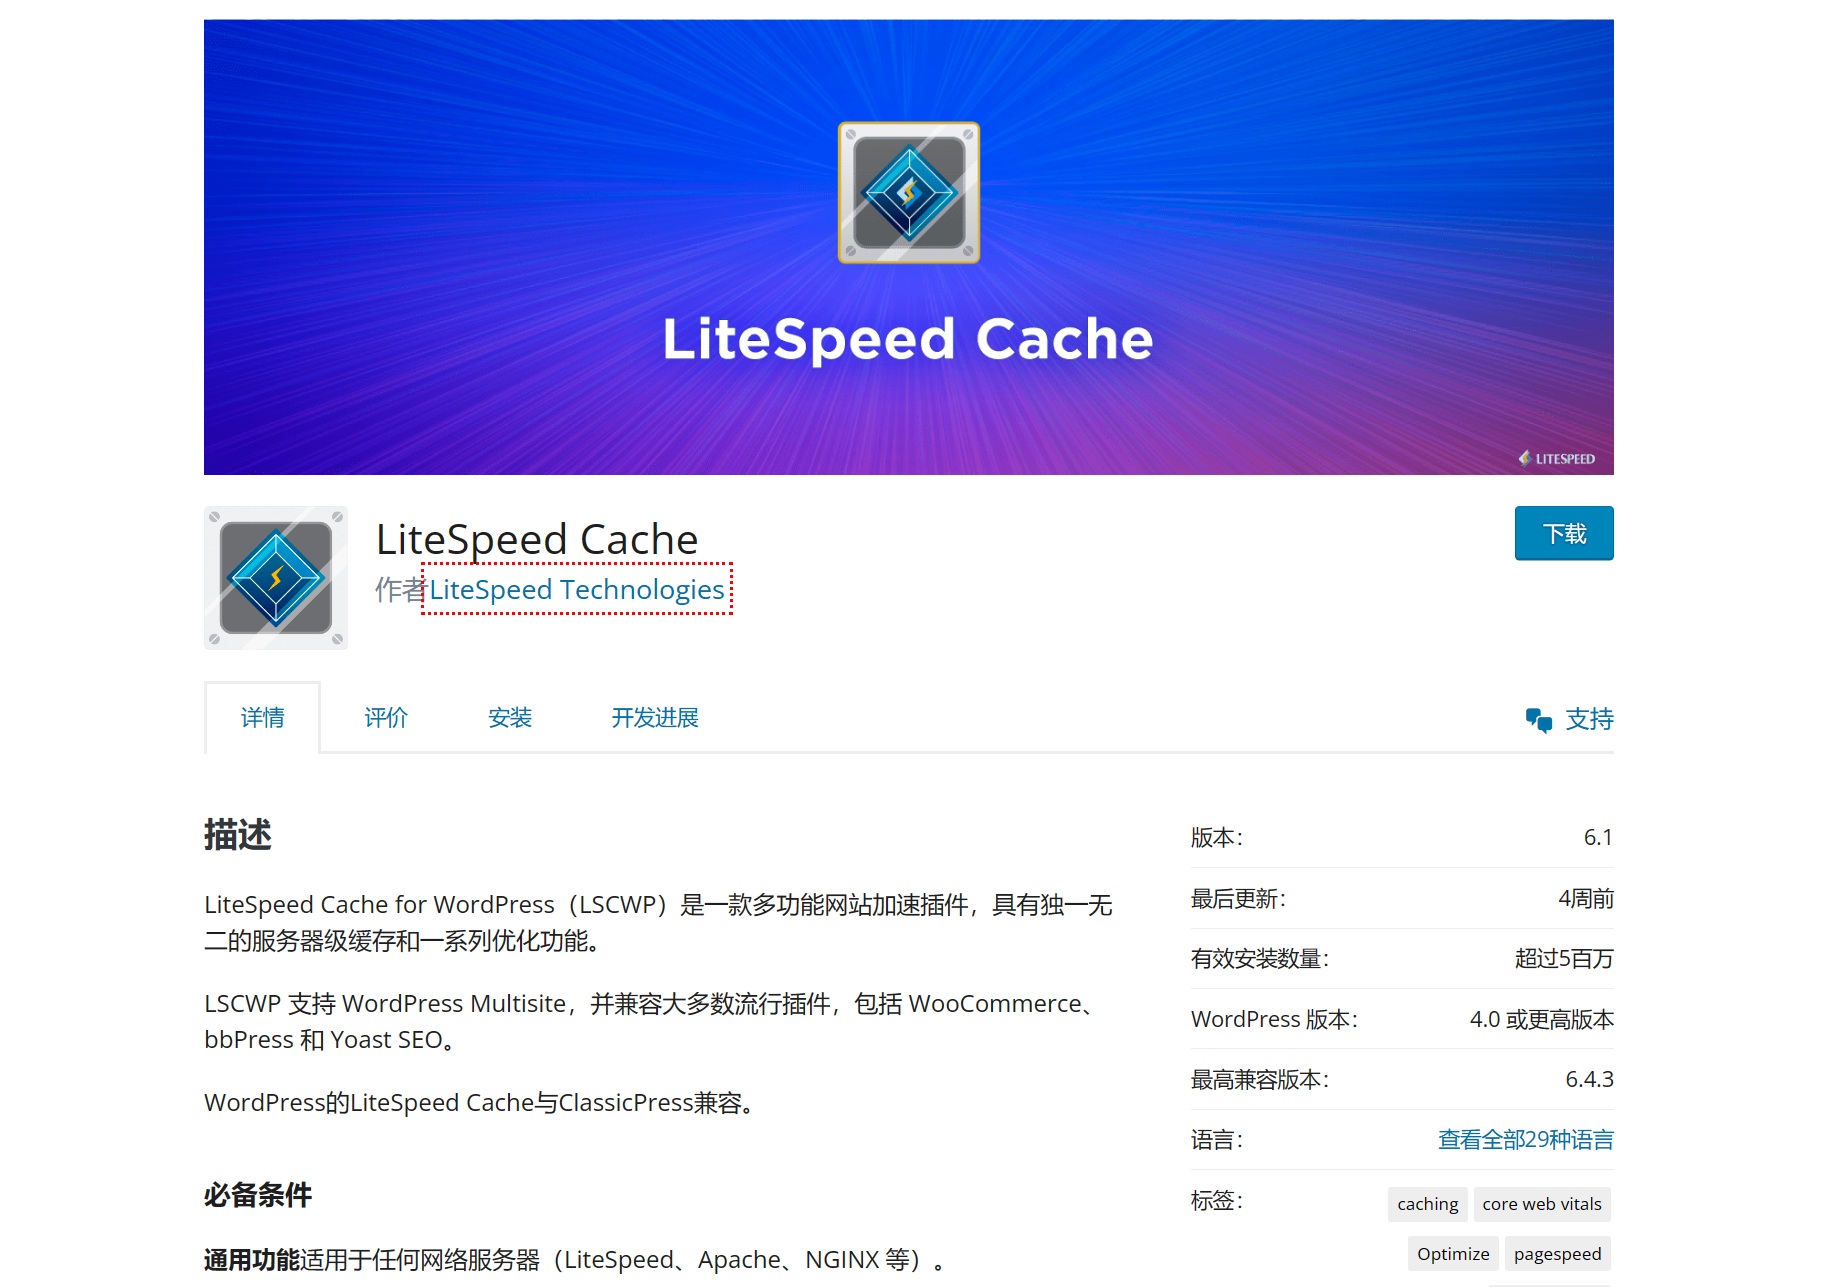 WordPress LiteSpeed Cache 插件5.7.0.1以下安全漏洞，请尽快更新